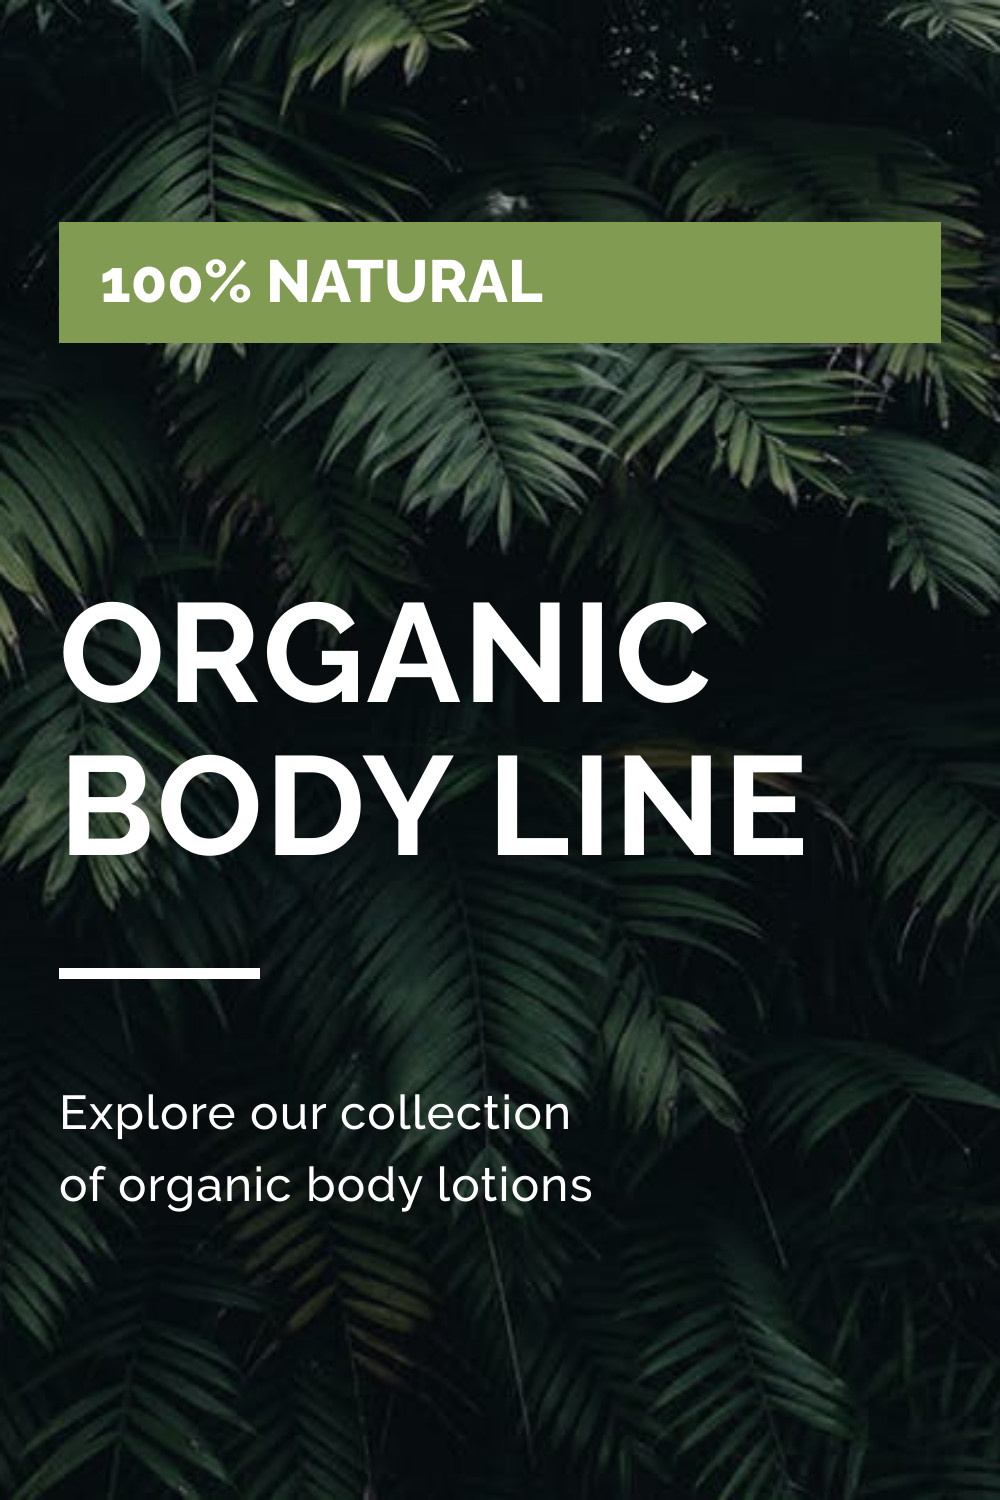 Green Organic Body Line